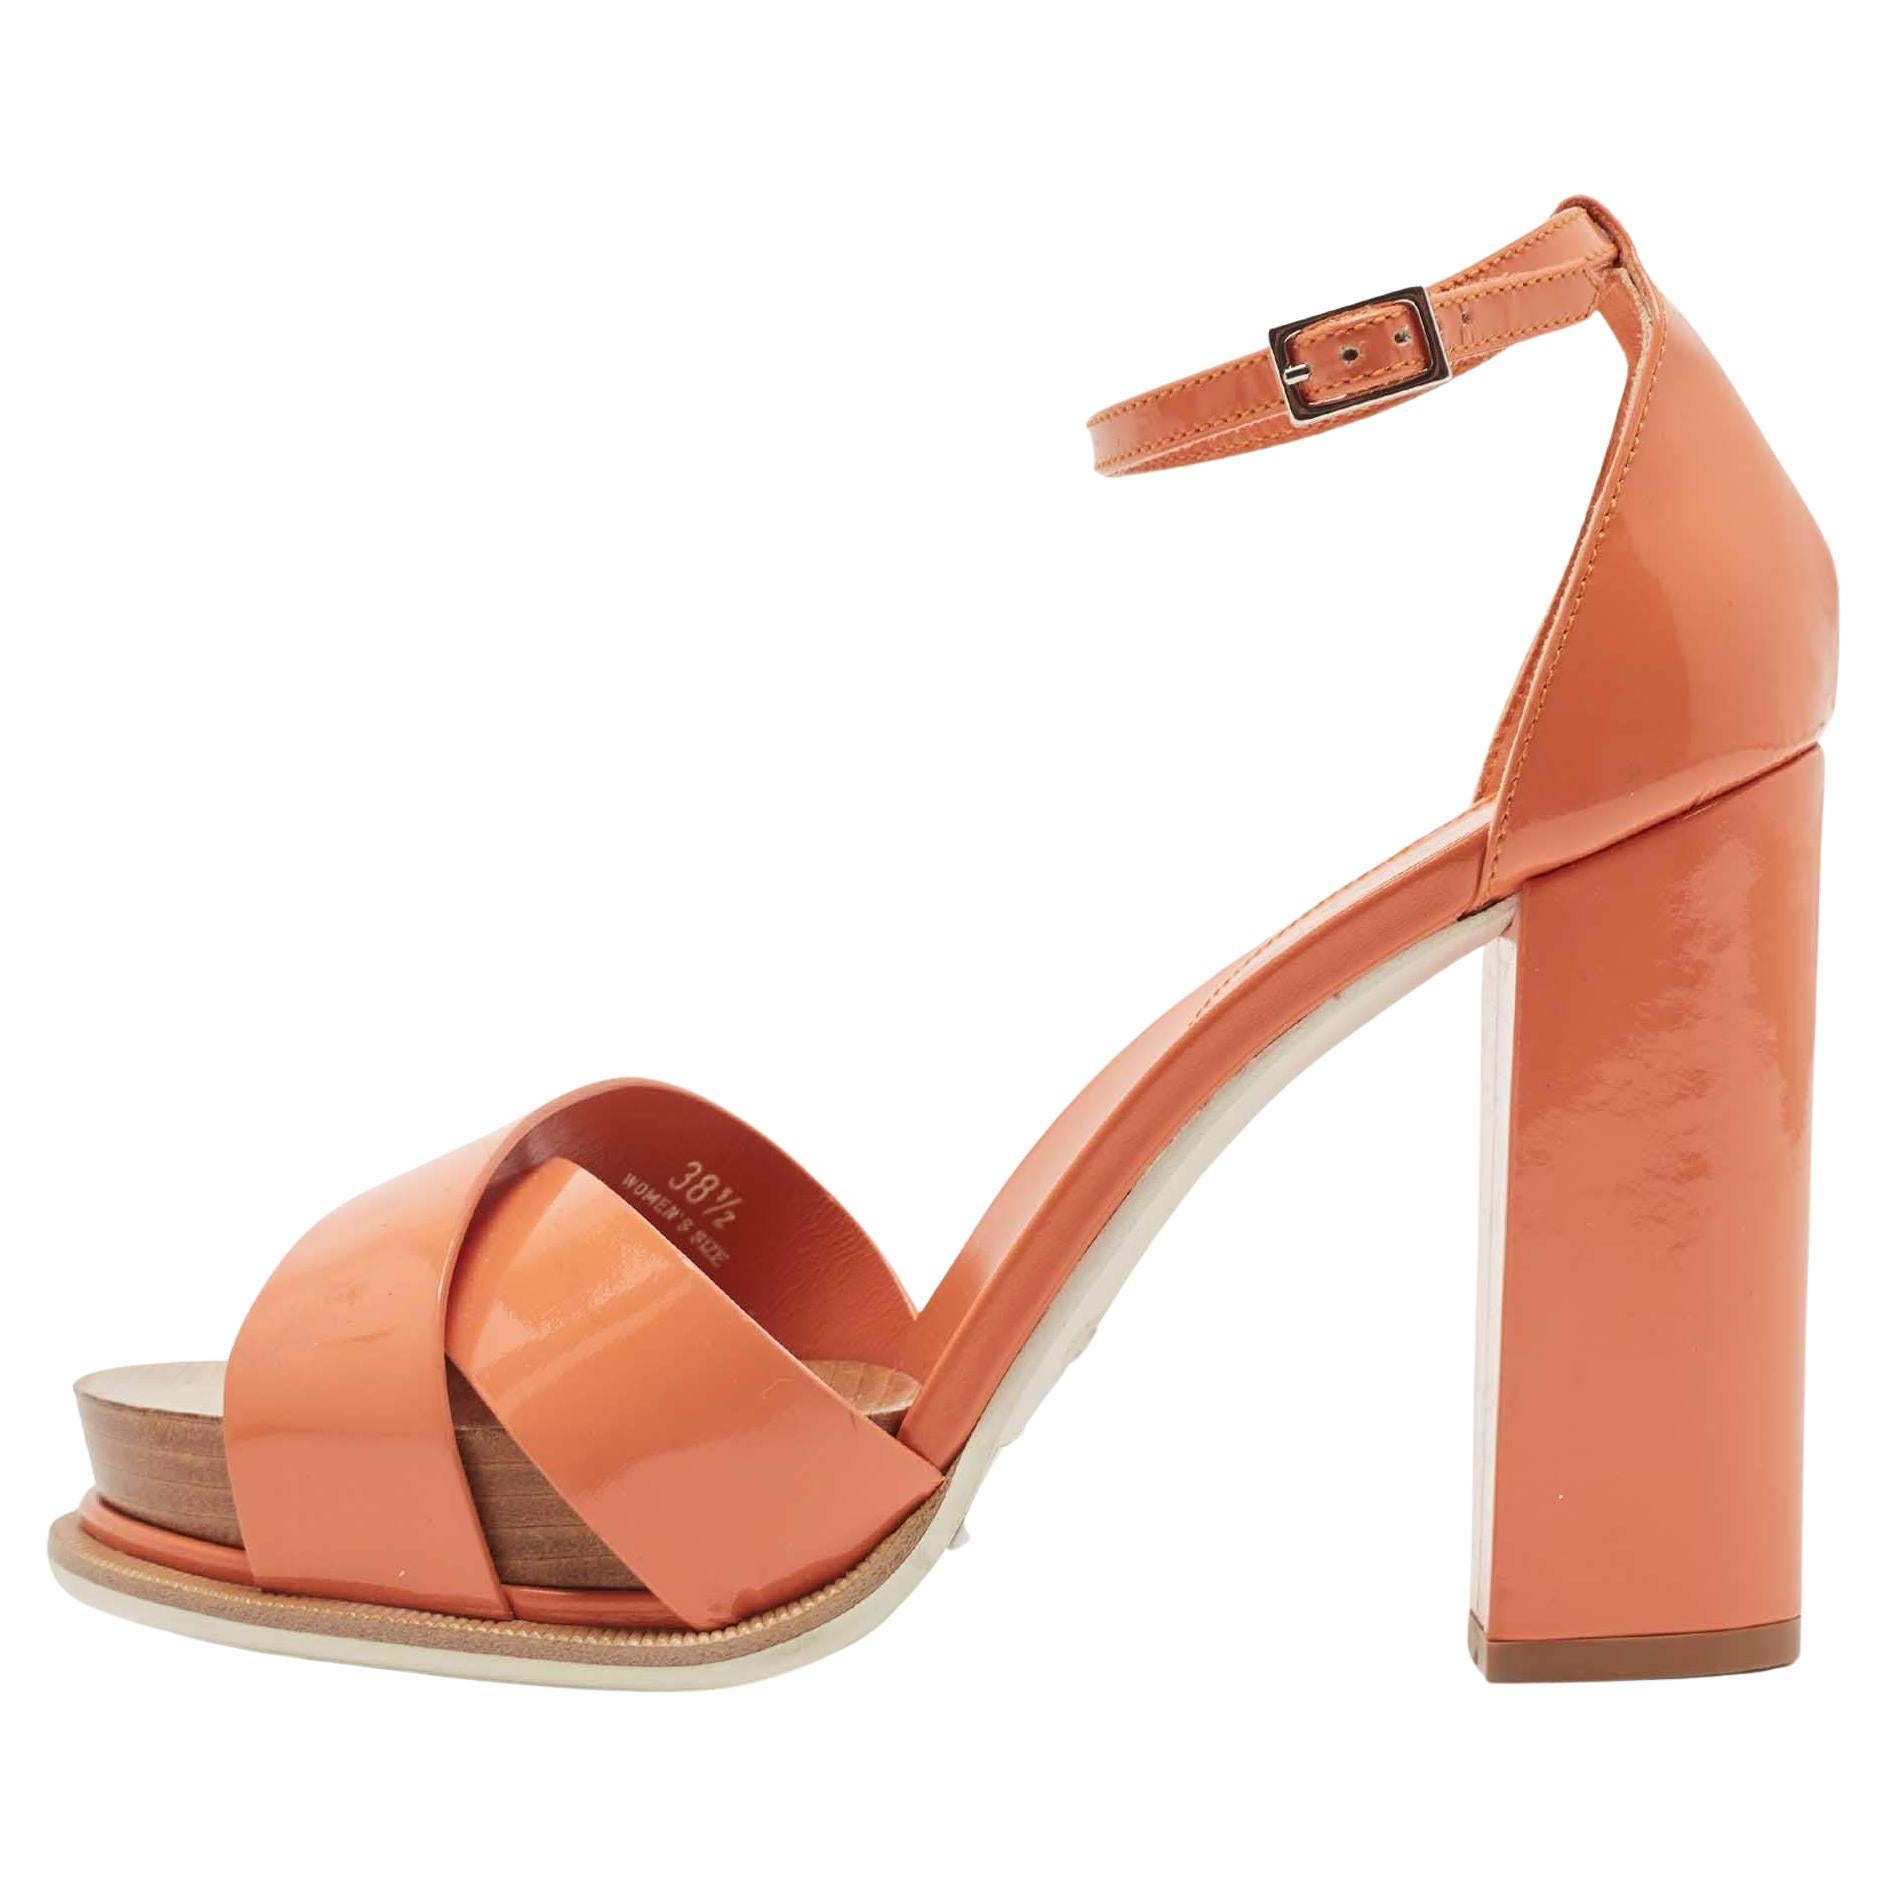 Tod's Light Orange Patent Leather Block Heel Ankle Strap Sandals Size 38.5